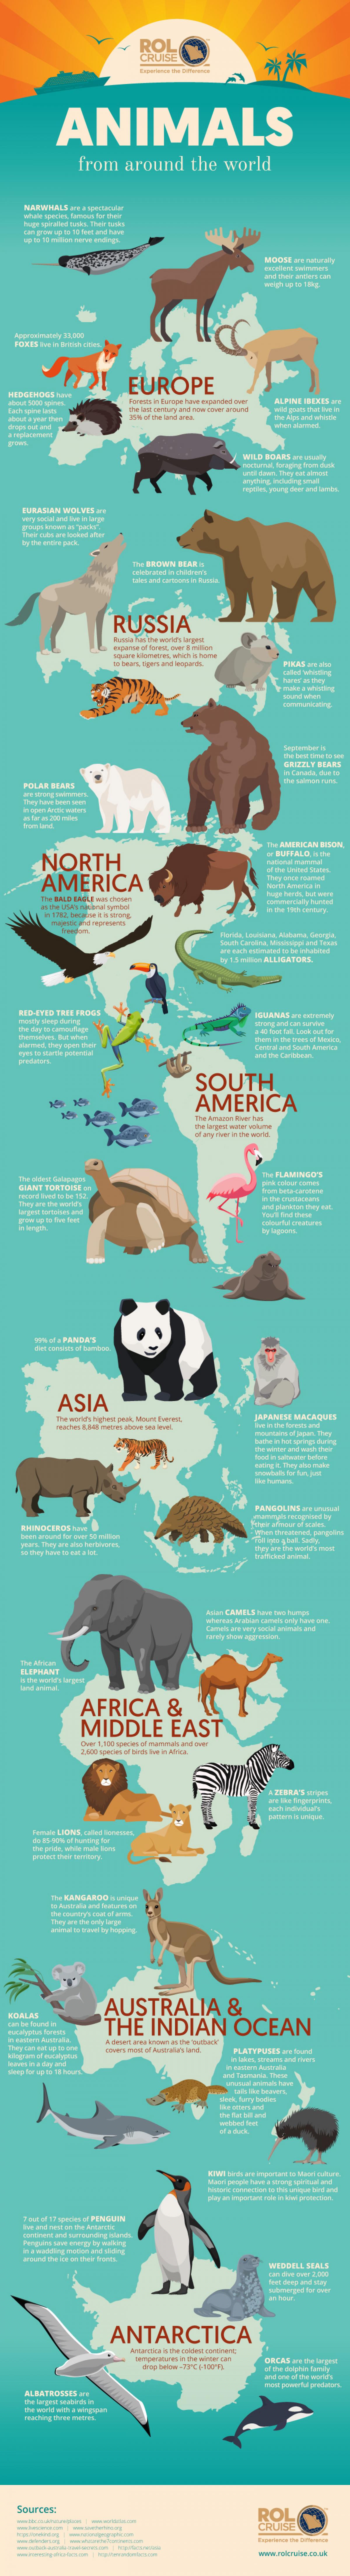 Animals From Around The World